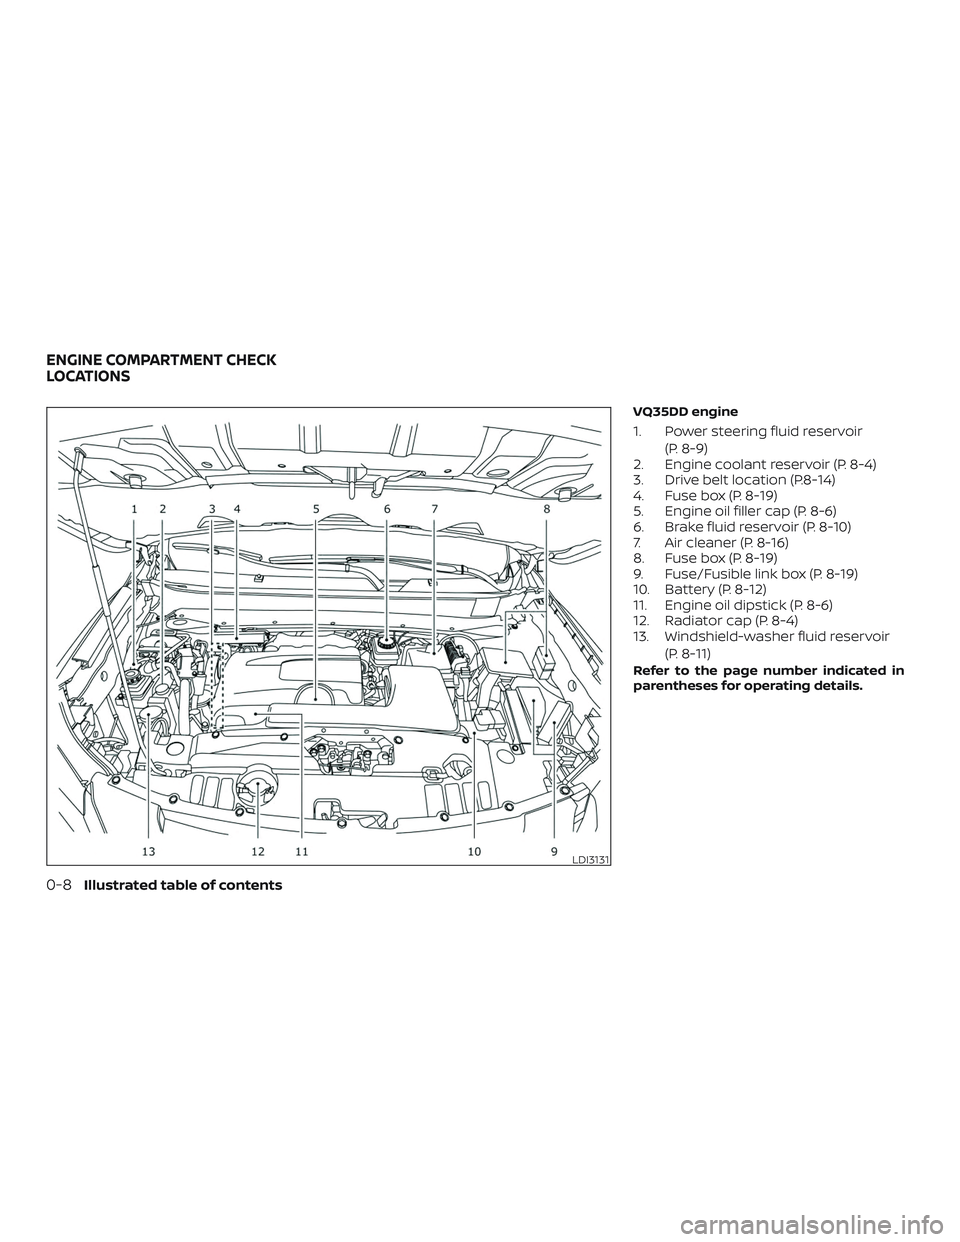 NISSAN PATHFINDER 2018  Owner´s Manual VQ35DD engine
1. Power steering fluid reservoir(P. 8-9)
2. Engine coolant reservoir (P. 8-4)
3. Drive belt location (P.8-14)
4. Fuse box (P. 8-19)
5. Engine oil filler cap (P. 8-6)
6. Brake fluid rese